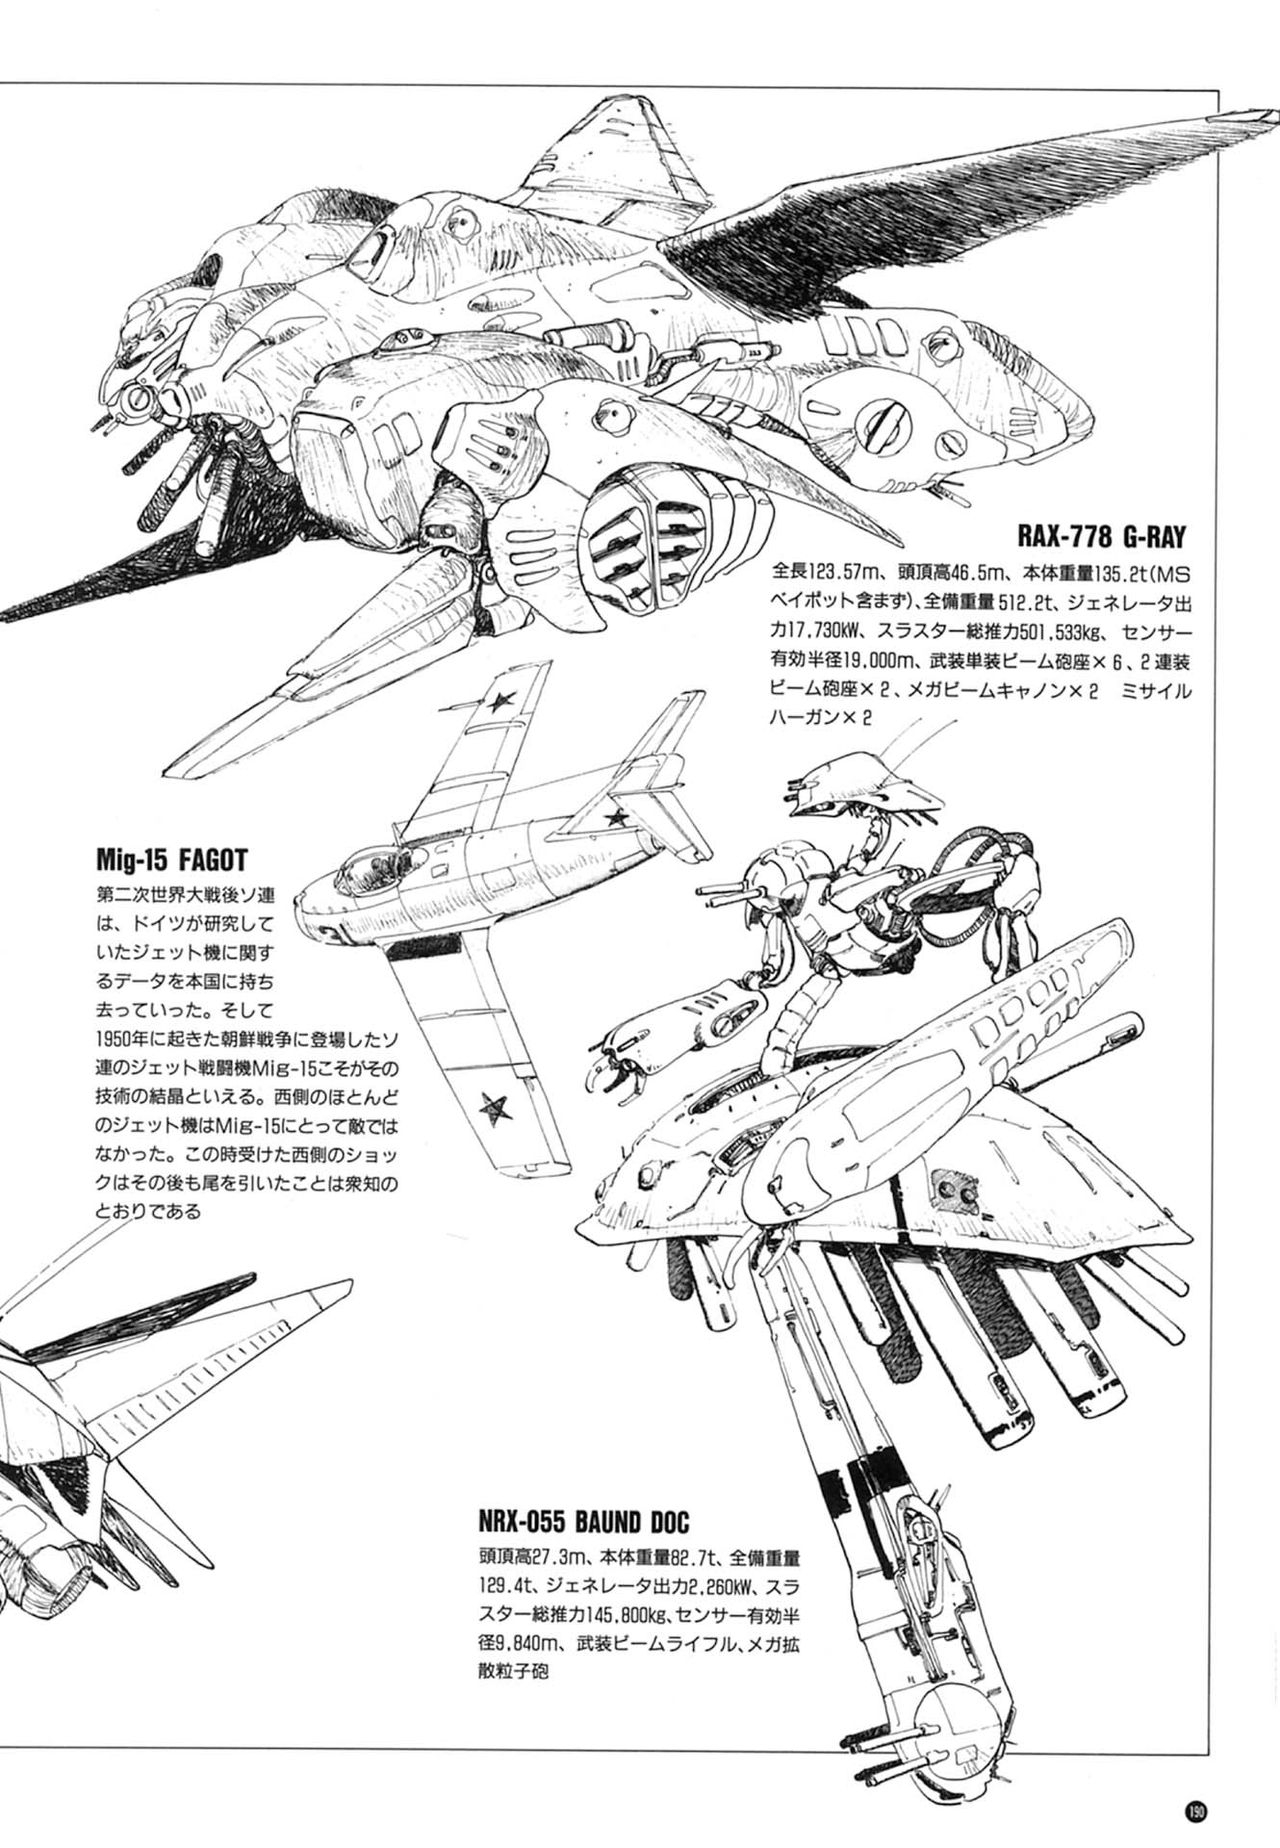 [Kazuhisa Kondo] Kazuhisa Kondo 2D & 3D Works - Go Ahead - From Mobile Suit Gundam to Original Mechanism 189